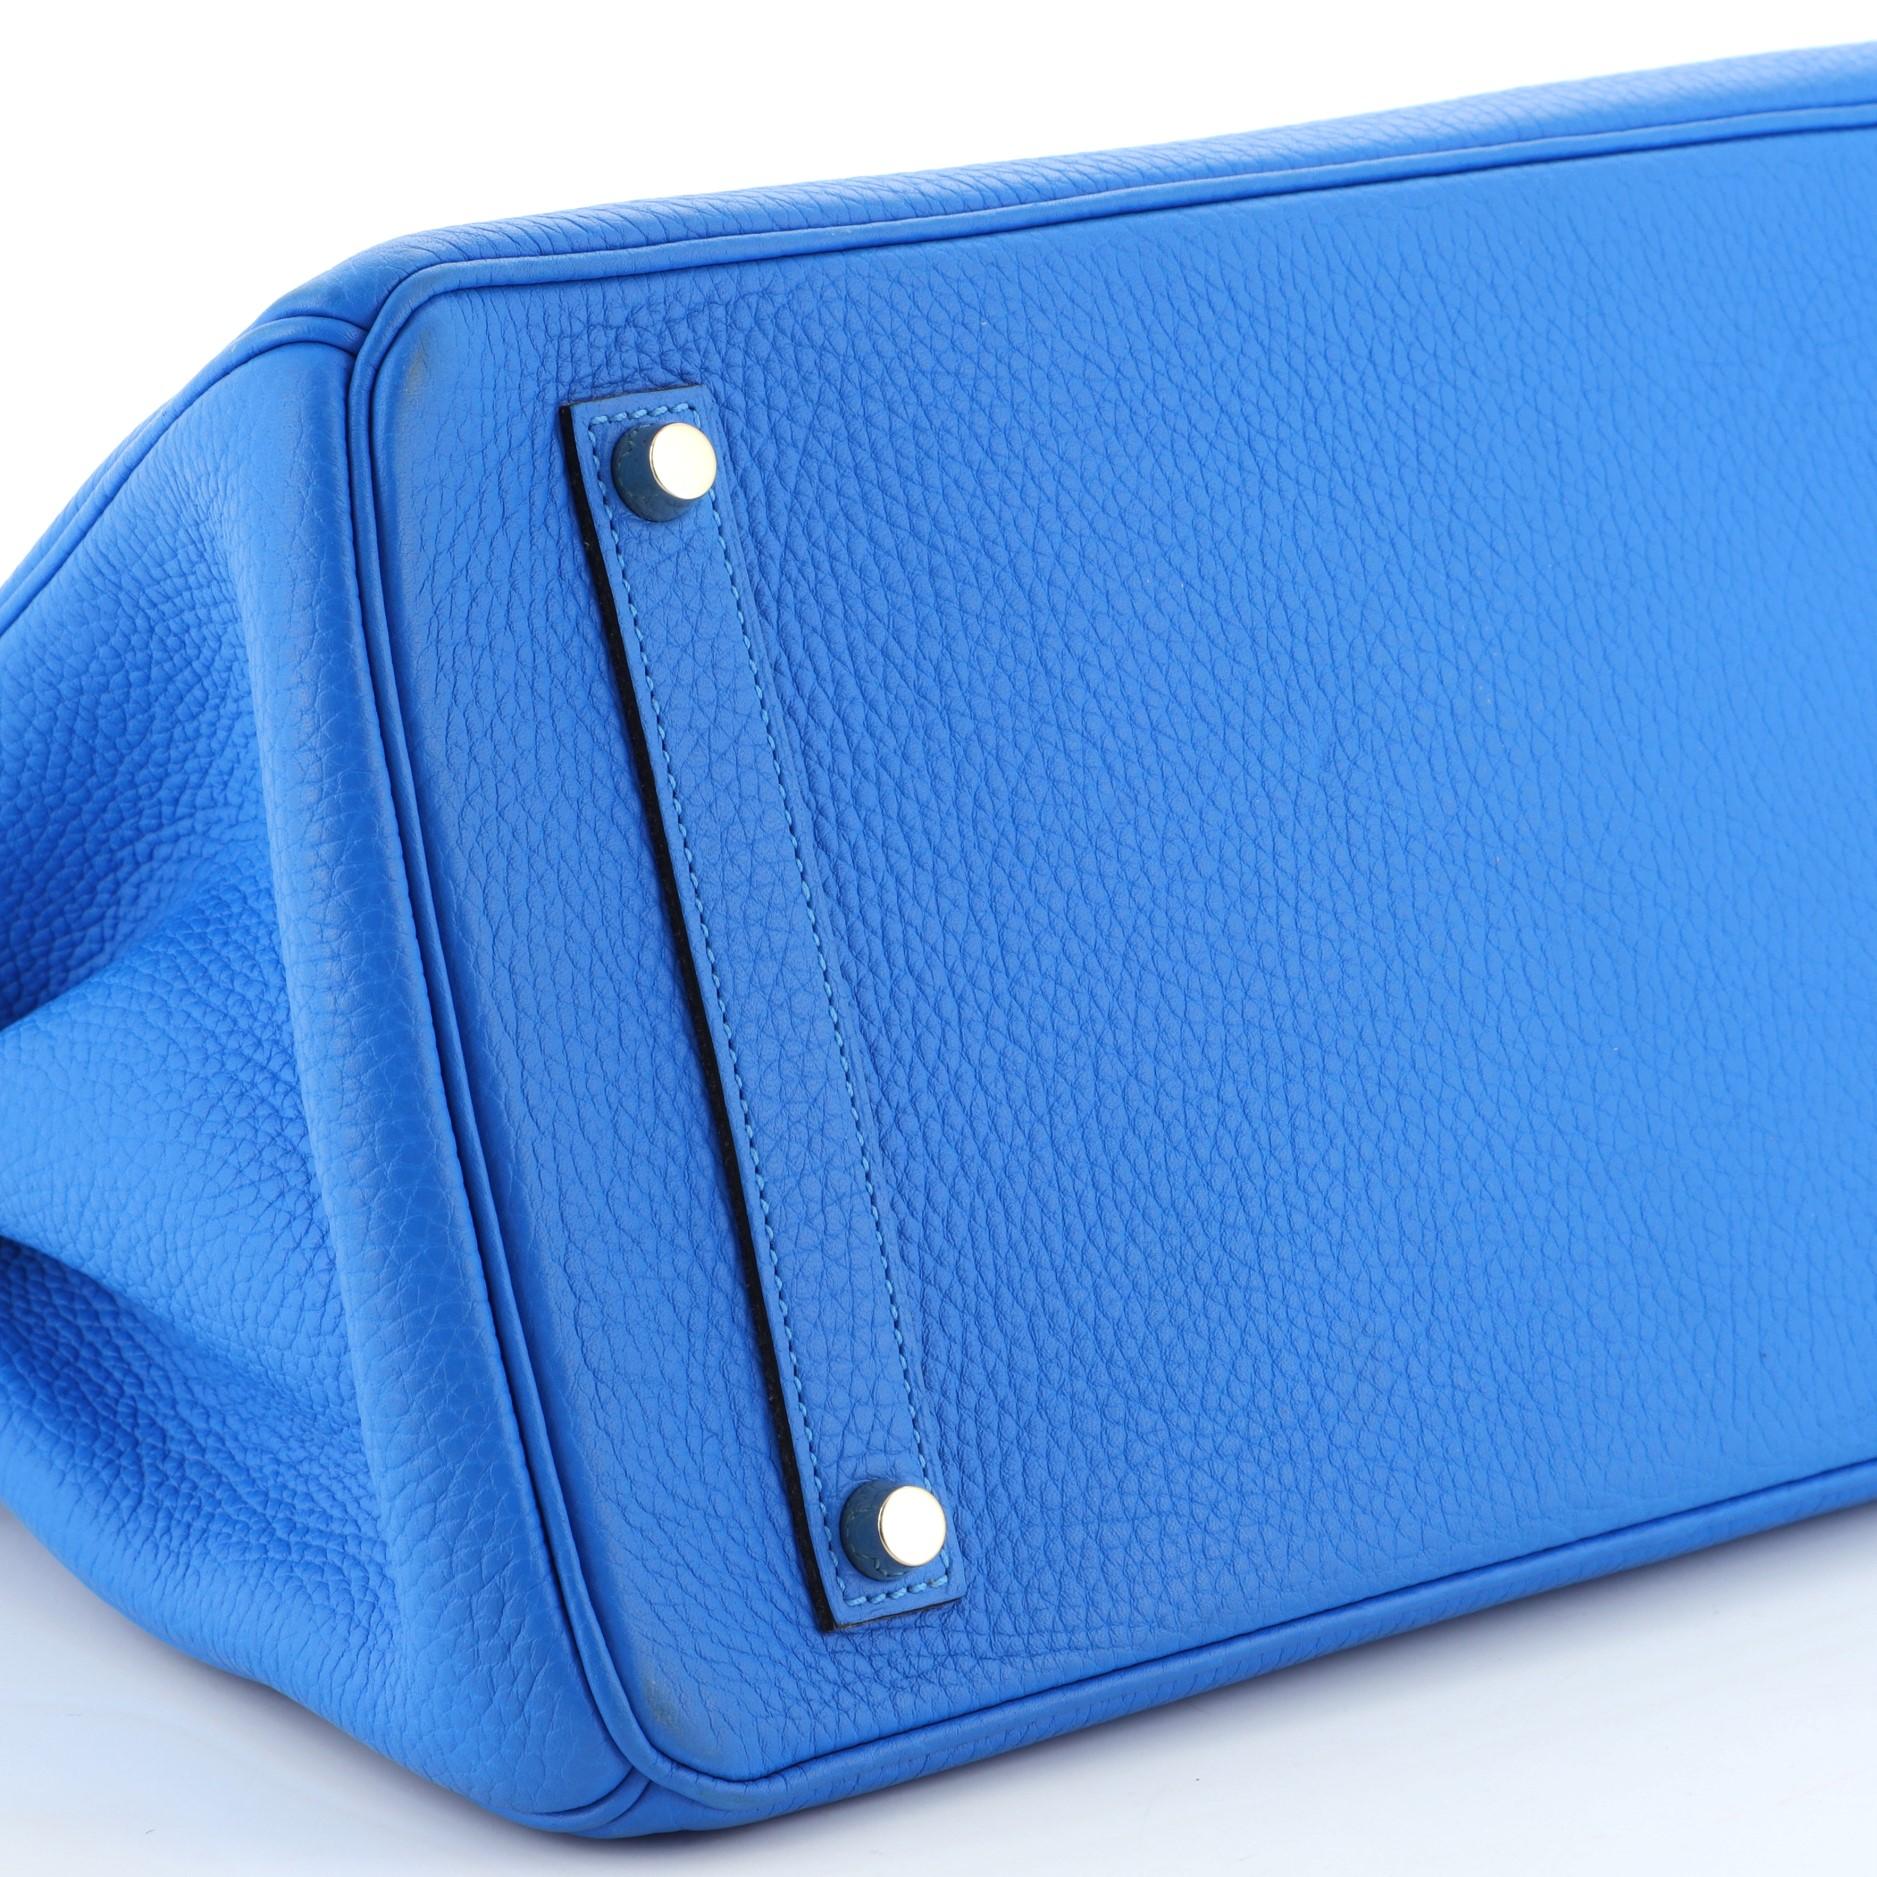 Hermes Birkin Handbag Blue Clemence With Gold Hardware 35  2